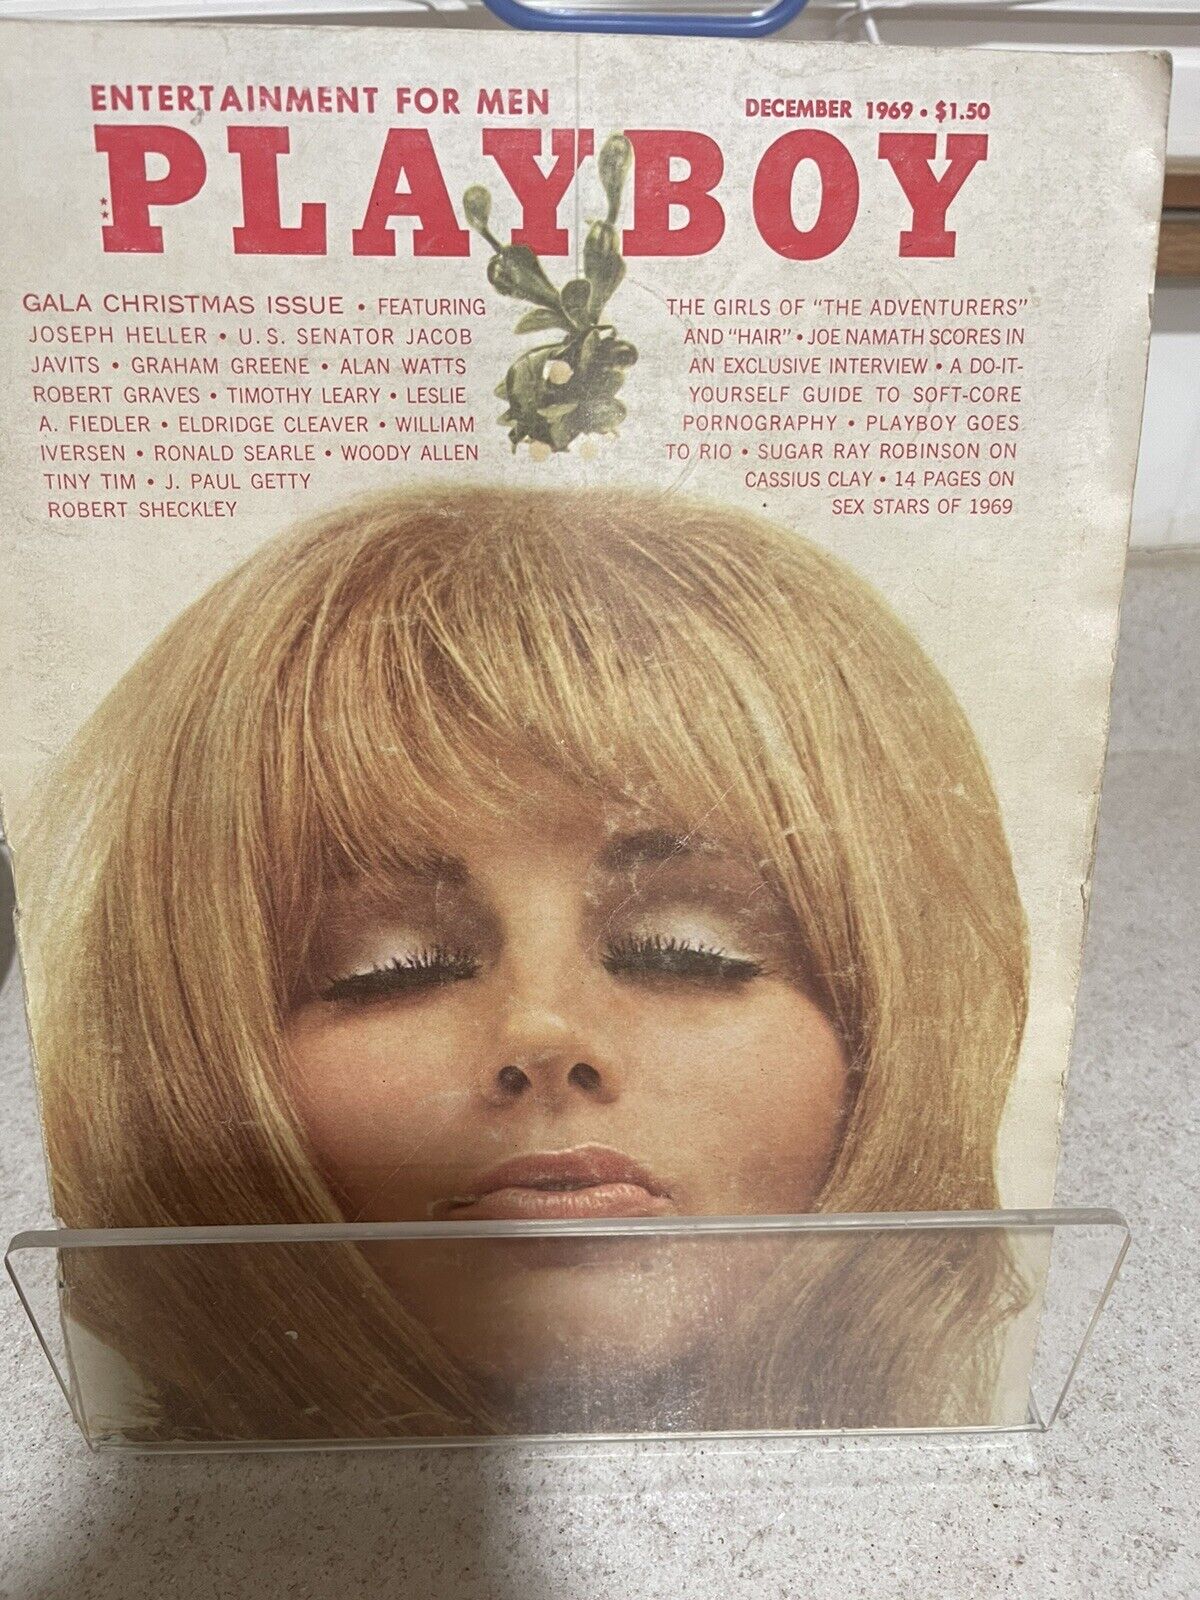 Vintage Playboy Magazine December 1969 - CENTERFOLD INTACT